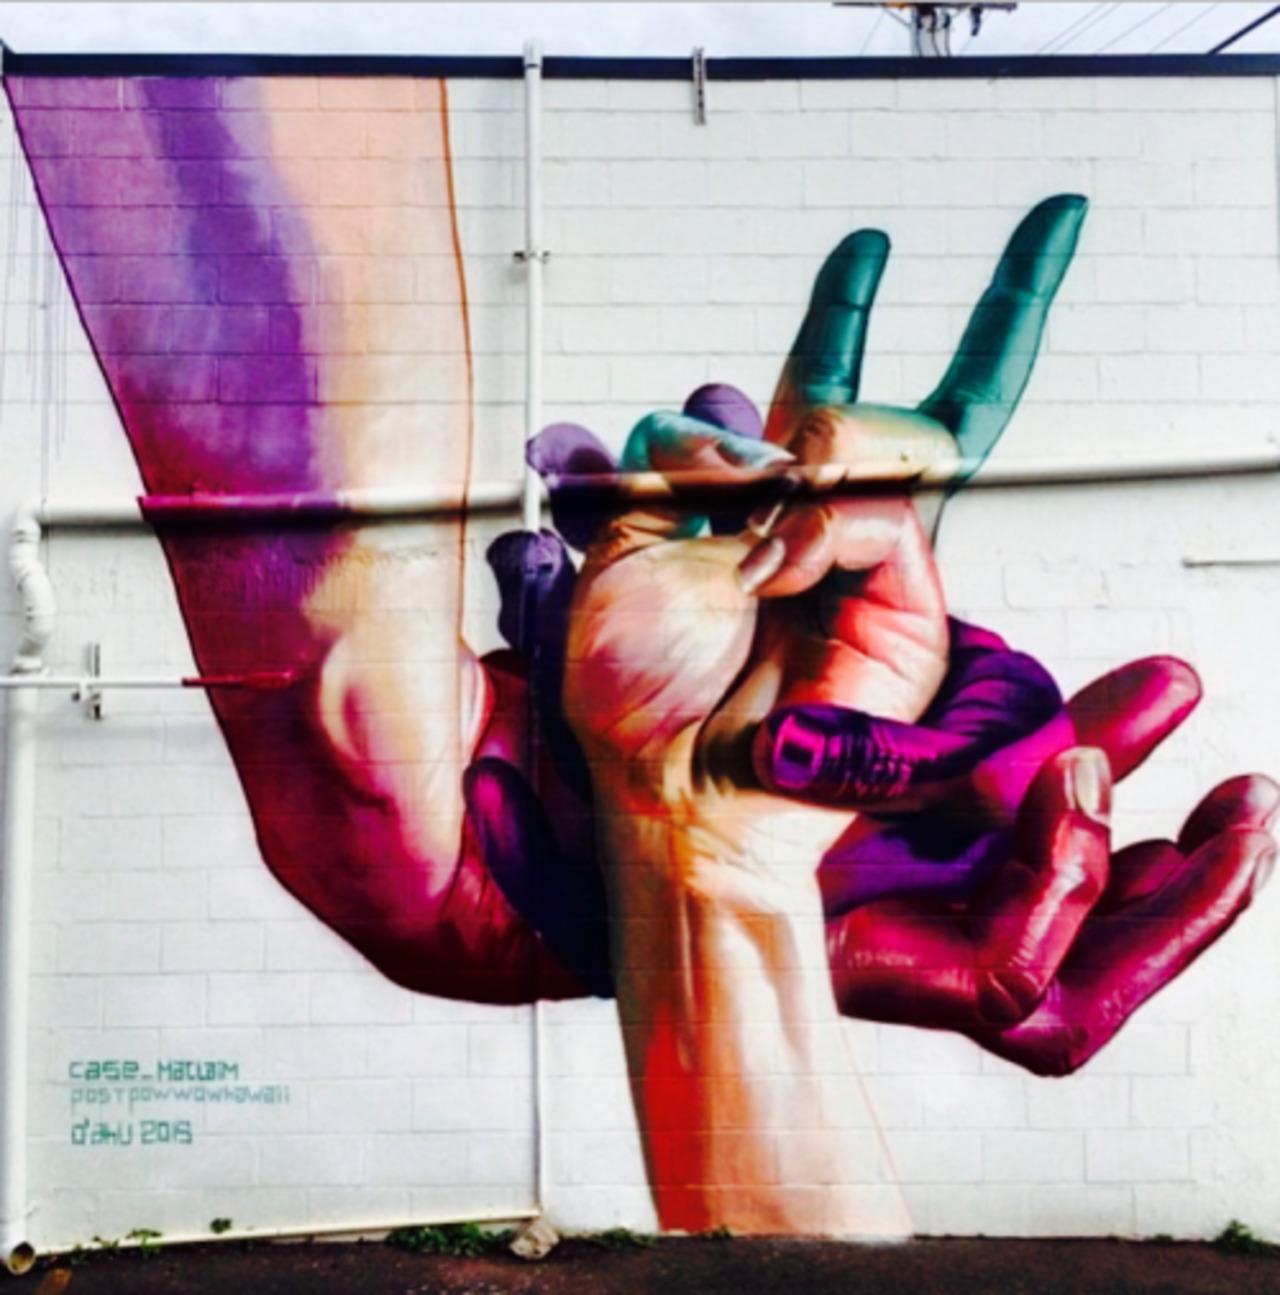 Photo - #Graffiti #Mural #Murales #Stencil - #ZangArt #Showcase - http://bit.ly/1w9B3W8 http://t.co/drAZMhRmNT